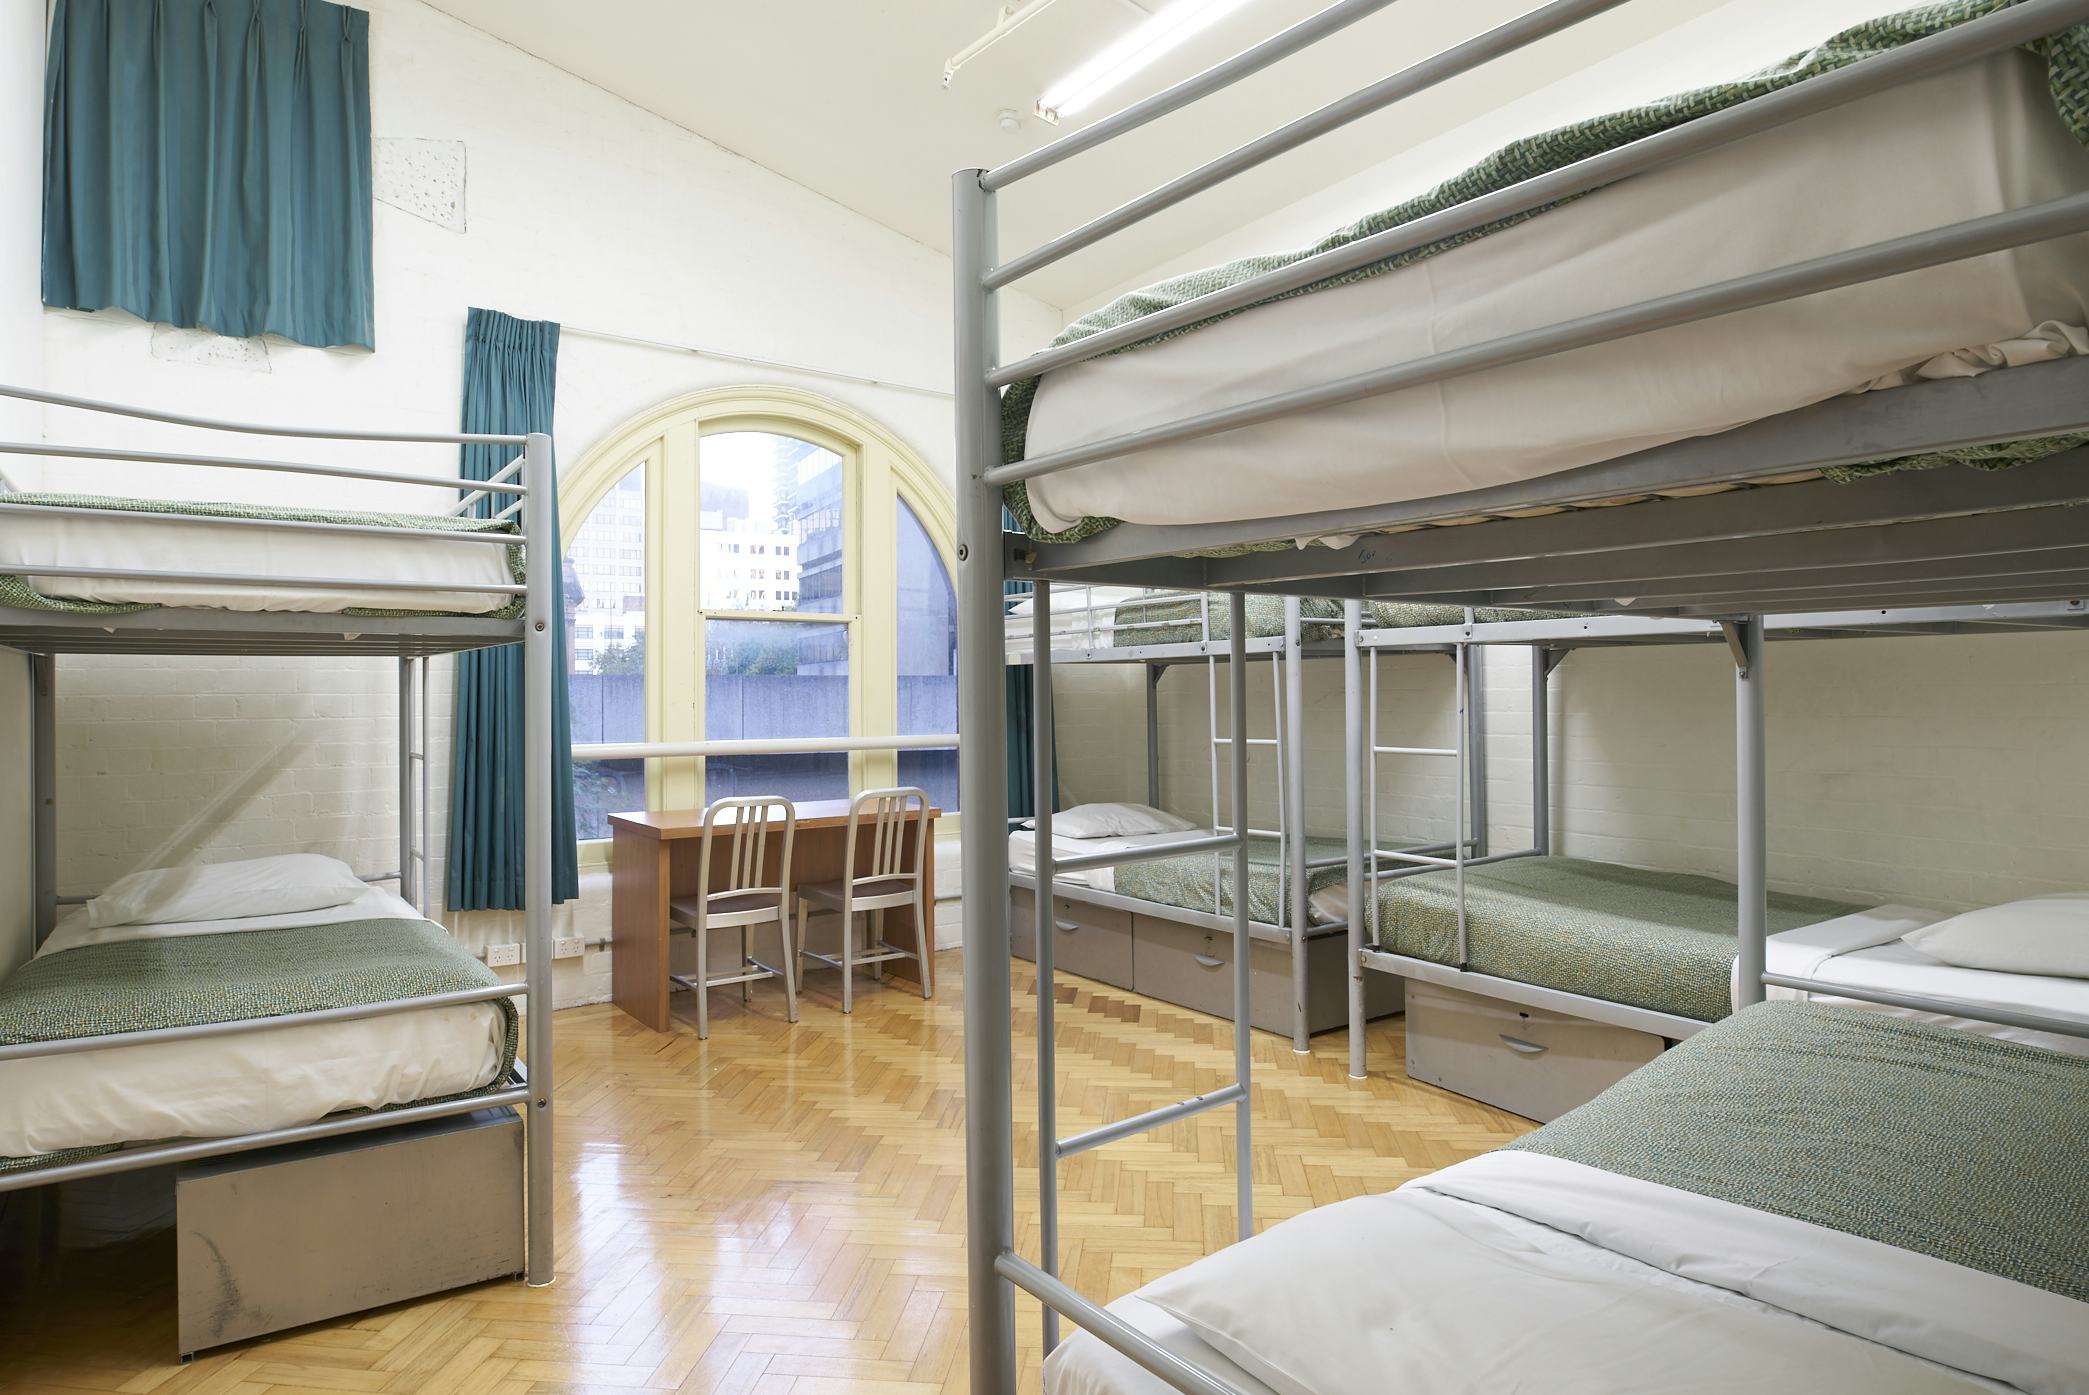 dorm accommodation at nomads sydney backpackers